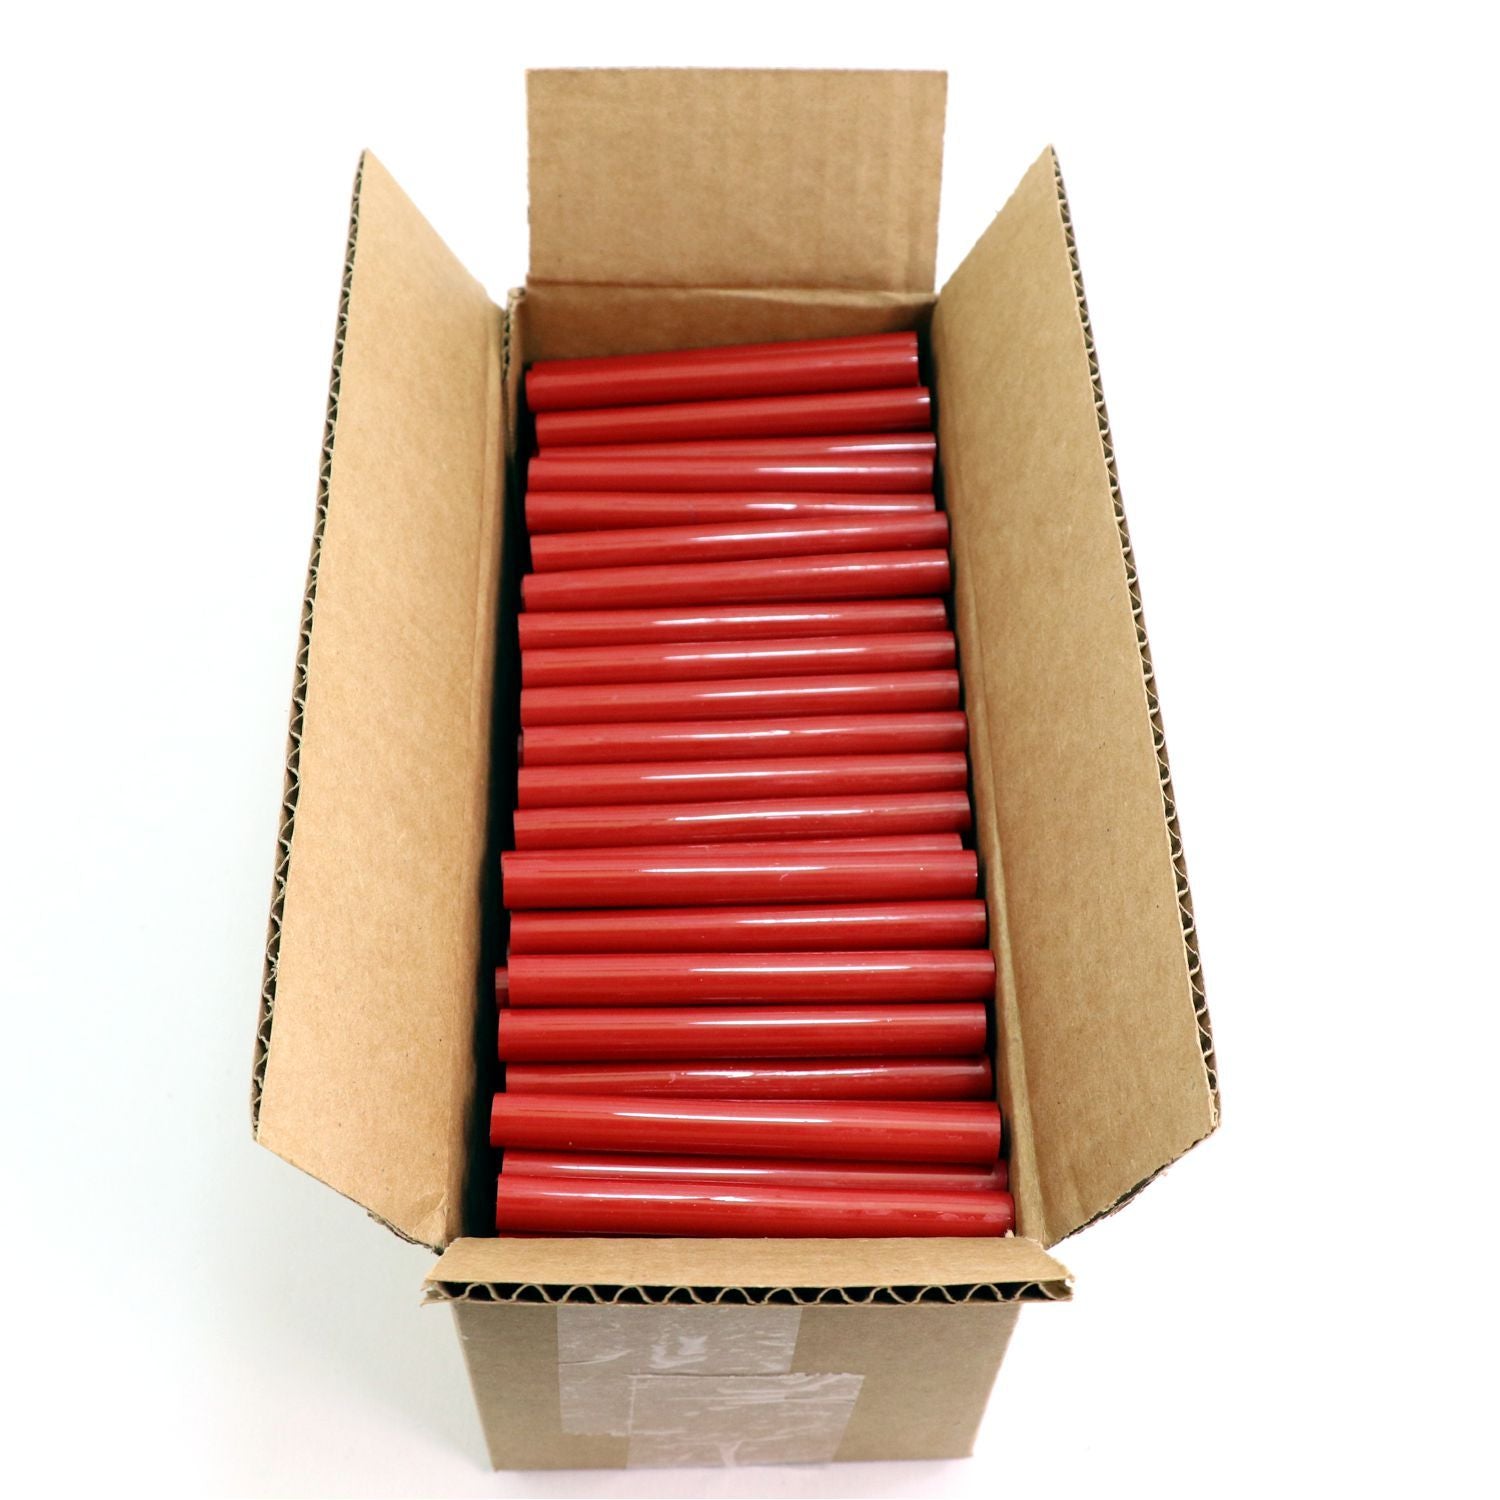 Surebonder Mini Size Hot Glue Sticks 4 Clear 5 lb. Box (FPR725M54